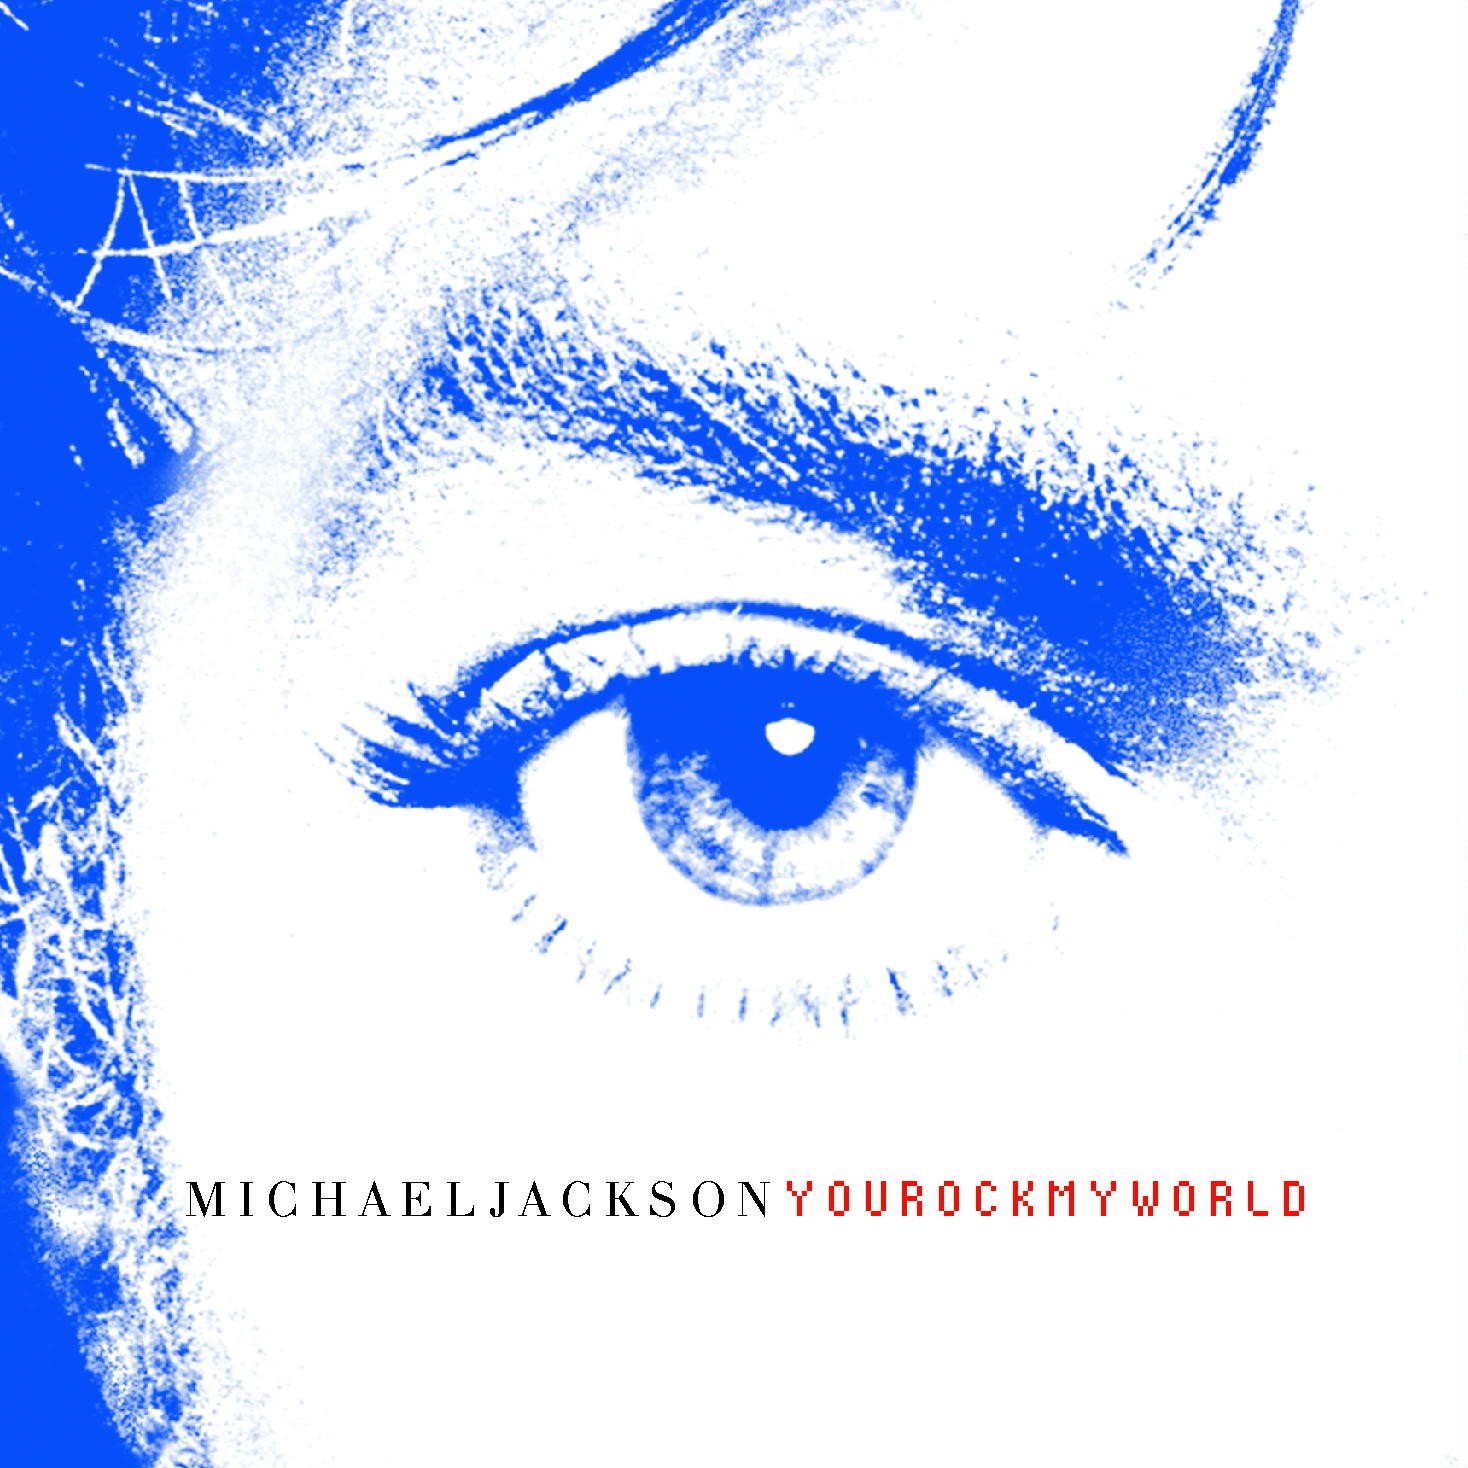 http://3.bp.blogspot.com/_mupIVJbjvuU/TE8-QRiIjHI/AAAAAAAAFbw/i0Py5Md8uLc/s1600/Michael+Jackson+-+You+Rock+My+World+(Official+Single+Cover).jpg